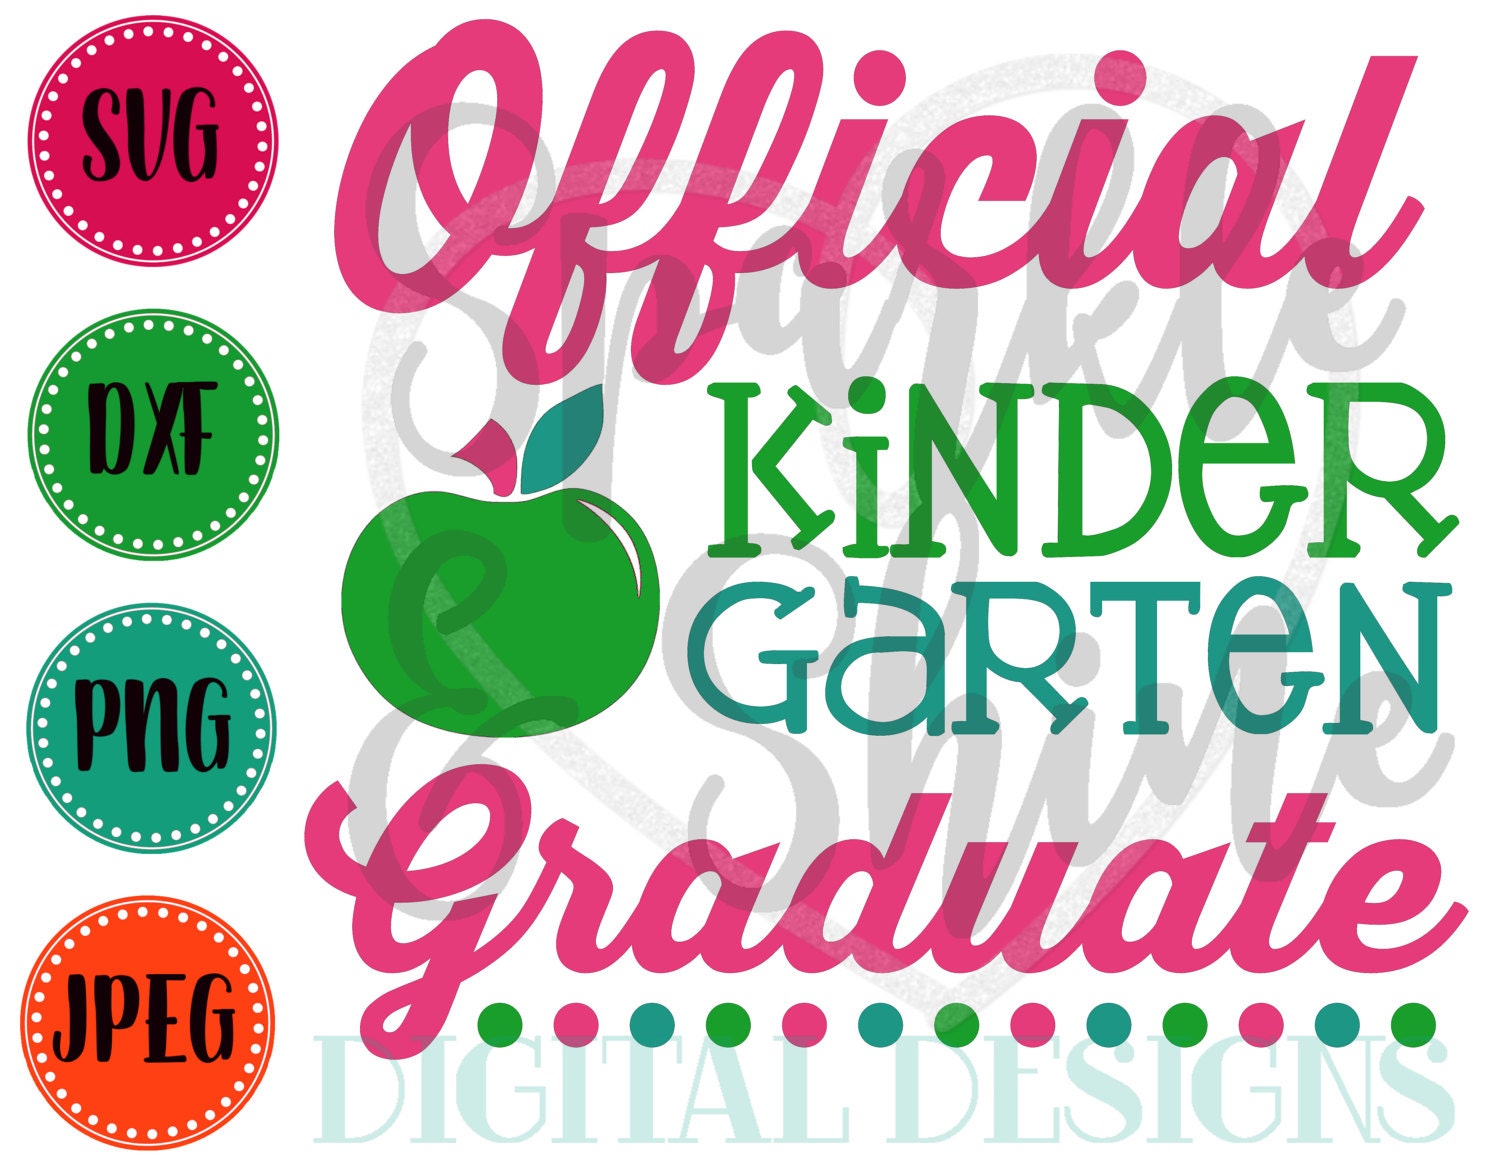 Download Kindergarten Graduate SVG DXF JPEG Kindergarten Cut File